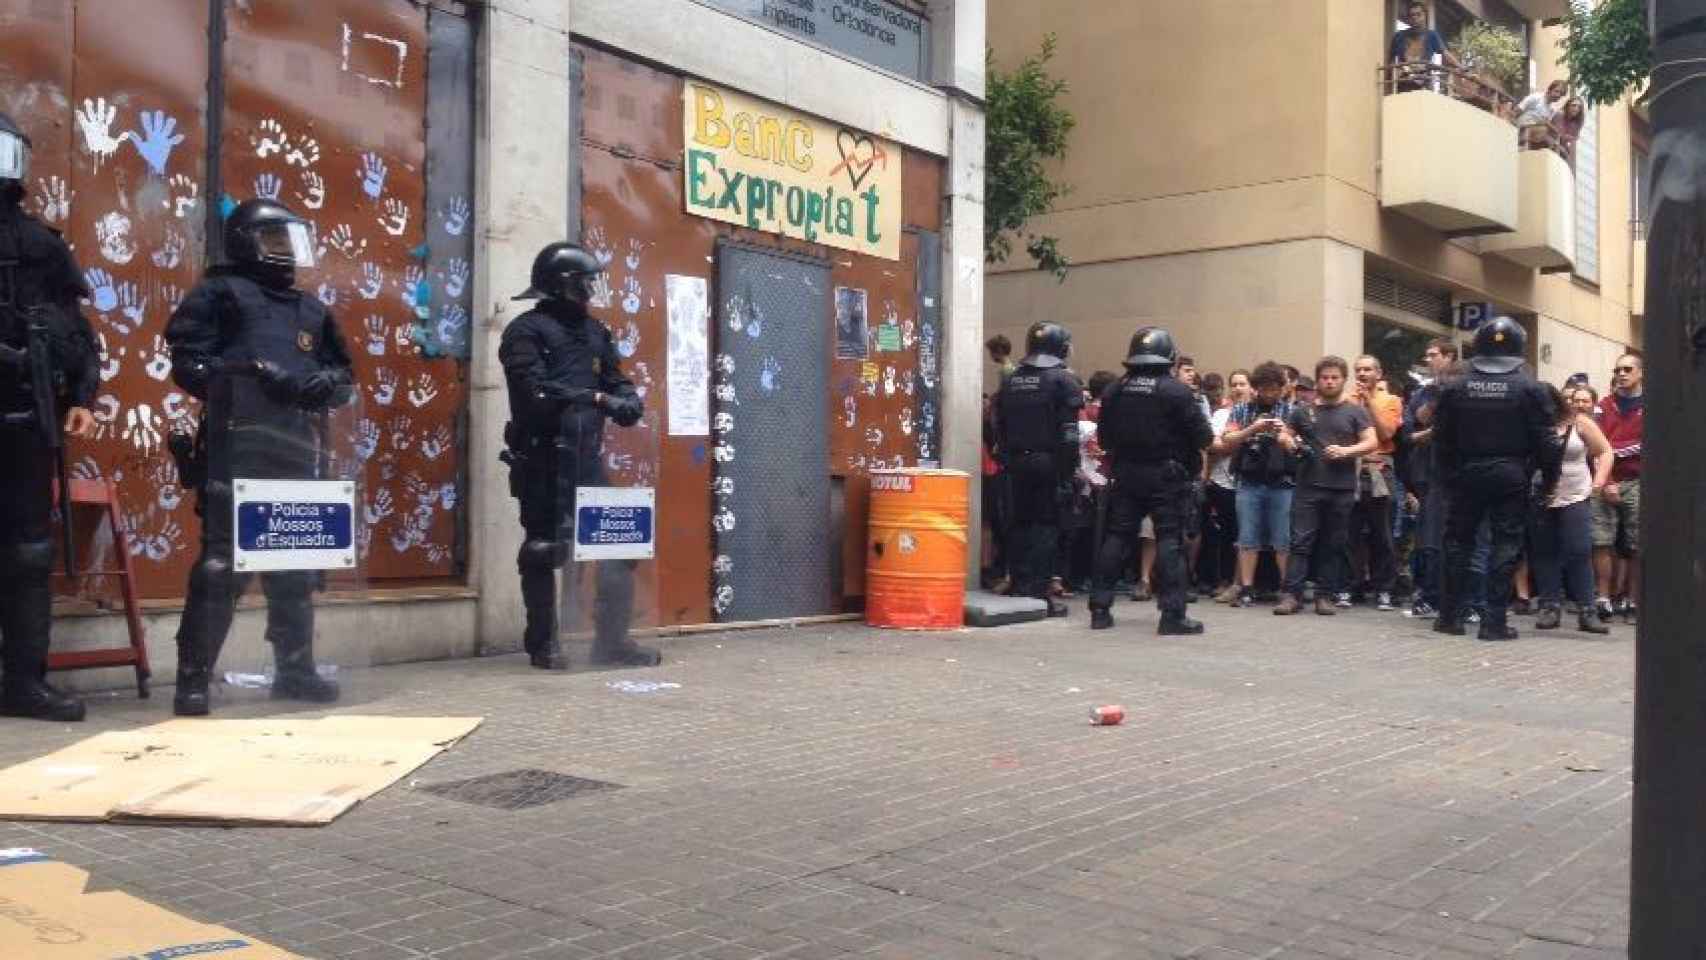 Desalojo del Banc Expropiat en Barcelona en 2016